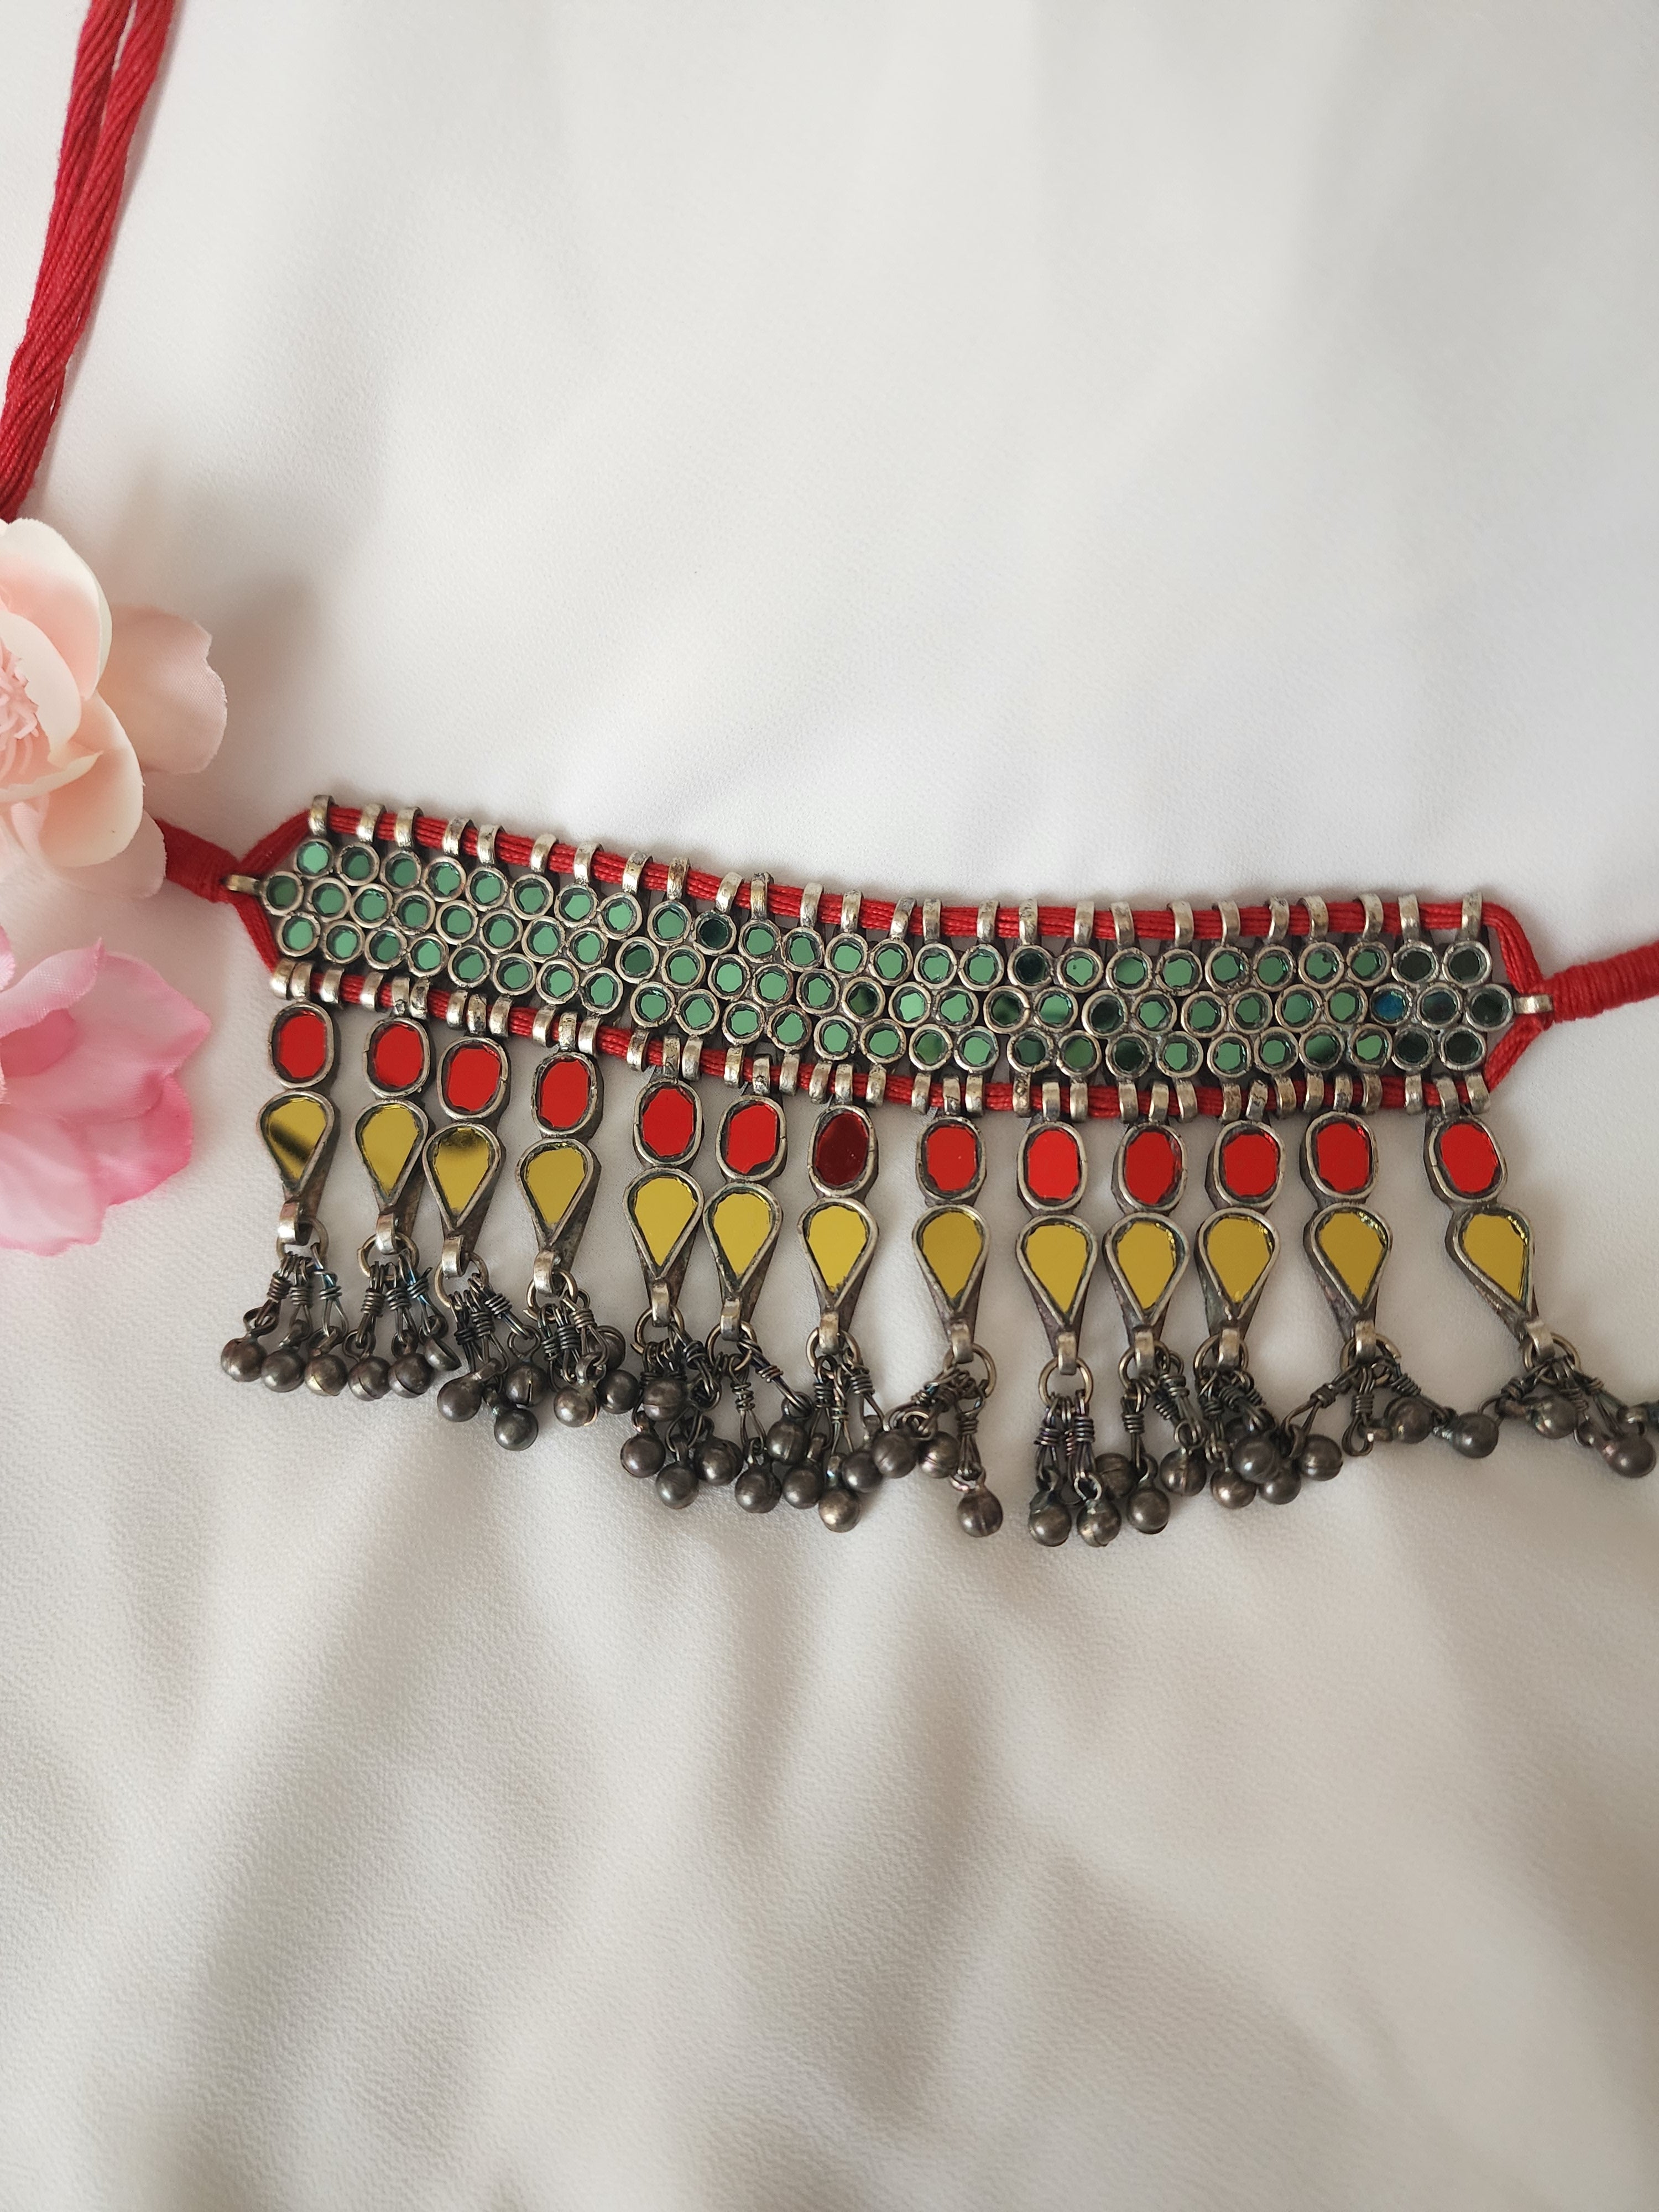 Afghani mirror choker neckline necklace